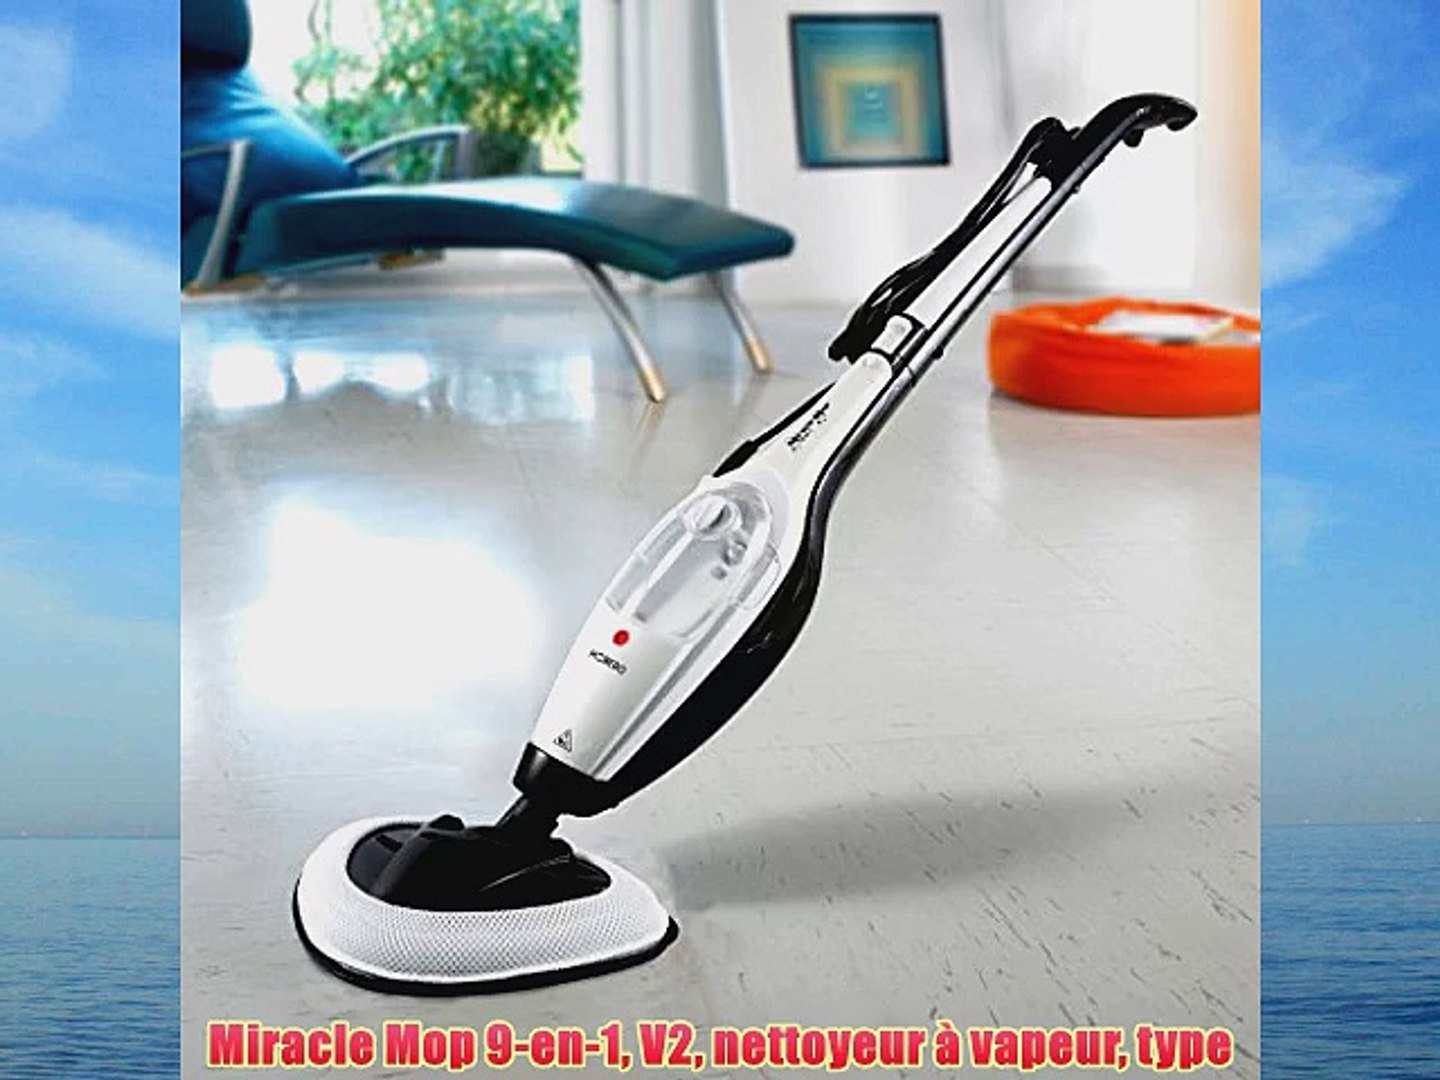 Miracle Mop 9-en-1 V2 nettoyeur ? vapeur type - Video Dailymotion